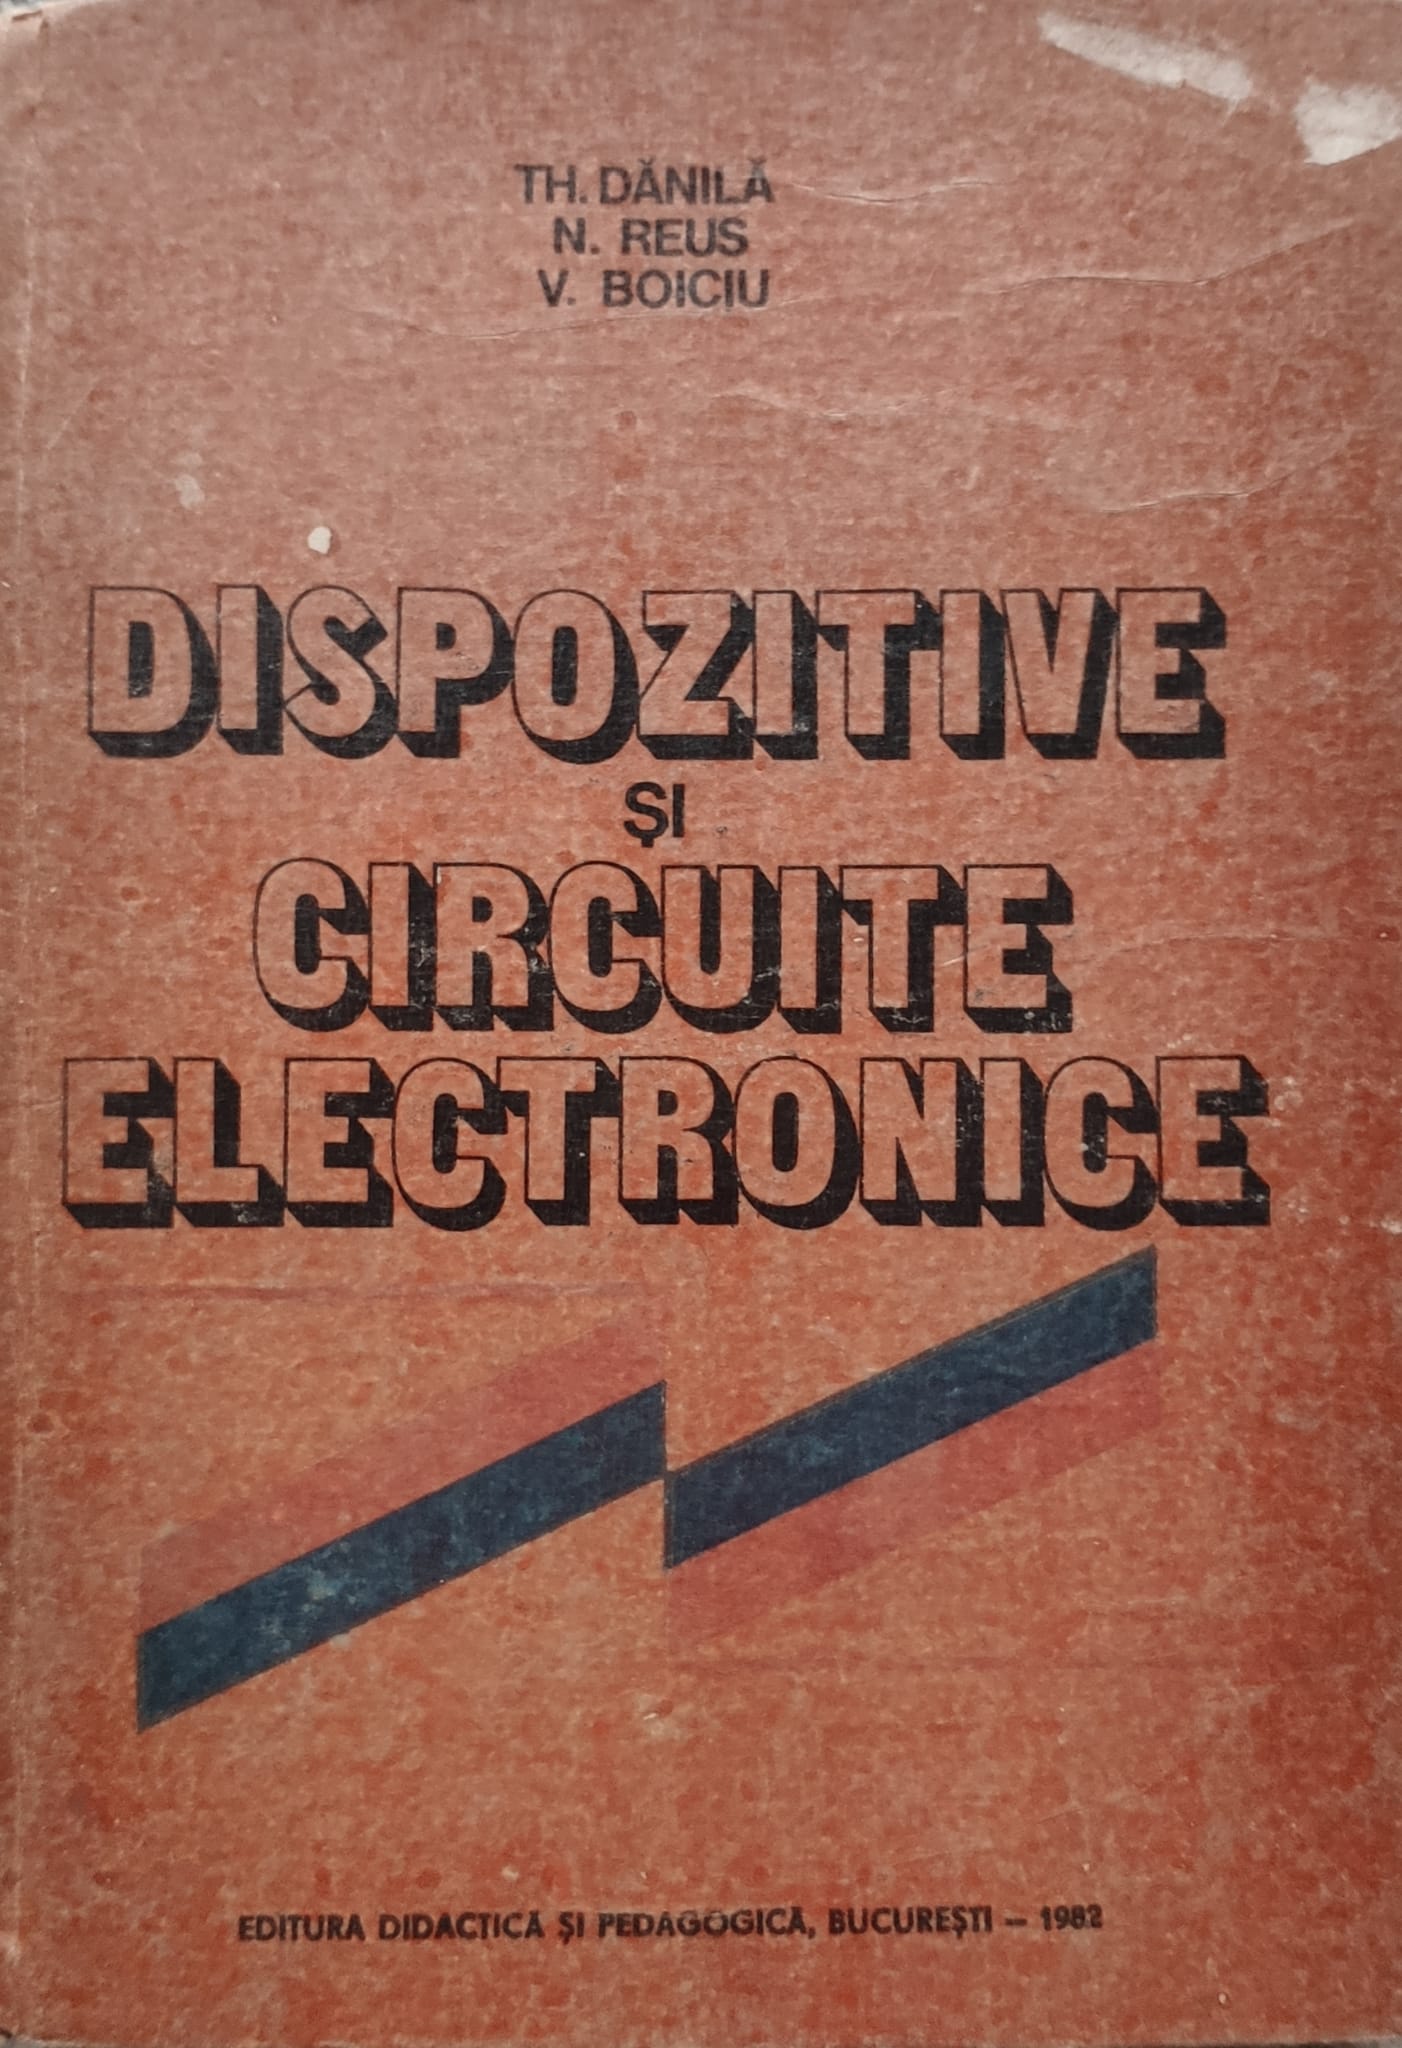 dispozitive si circuite electronice                                                                  th. danila n. reus v. boiciu                                                                        